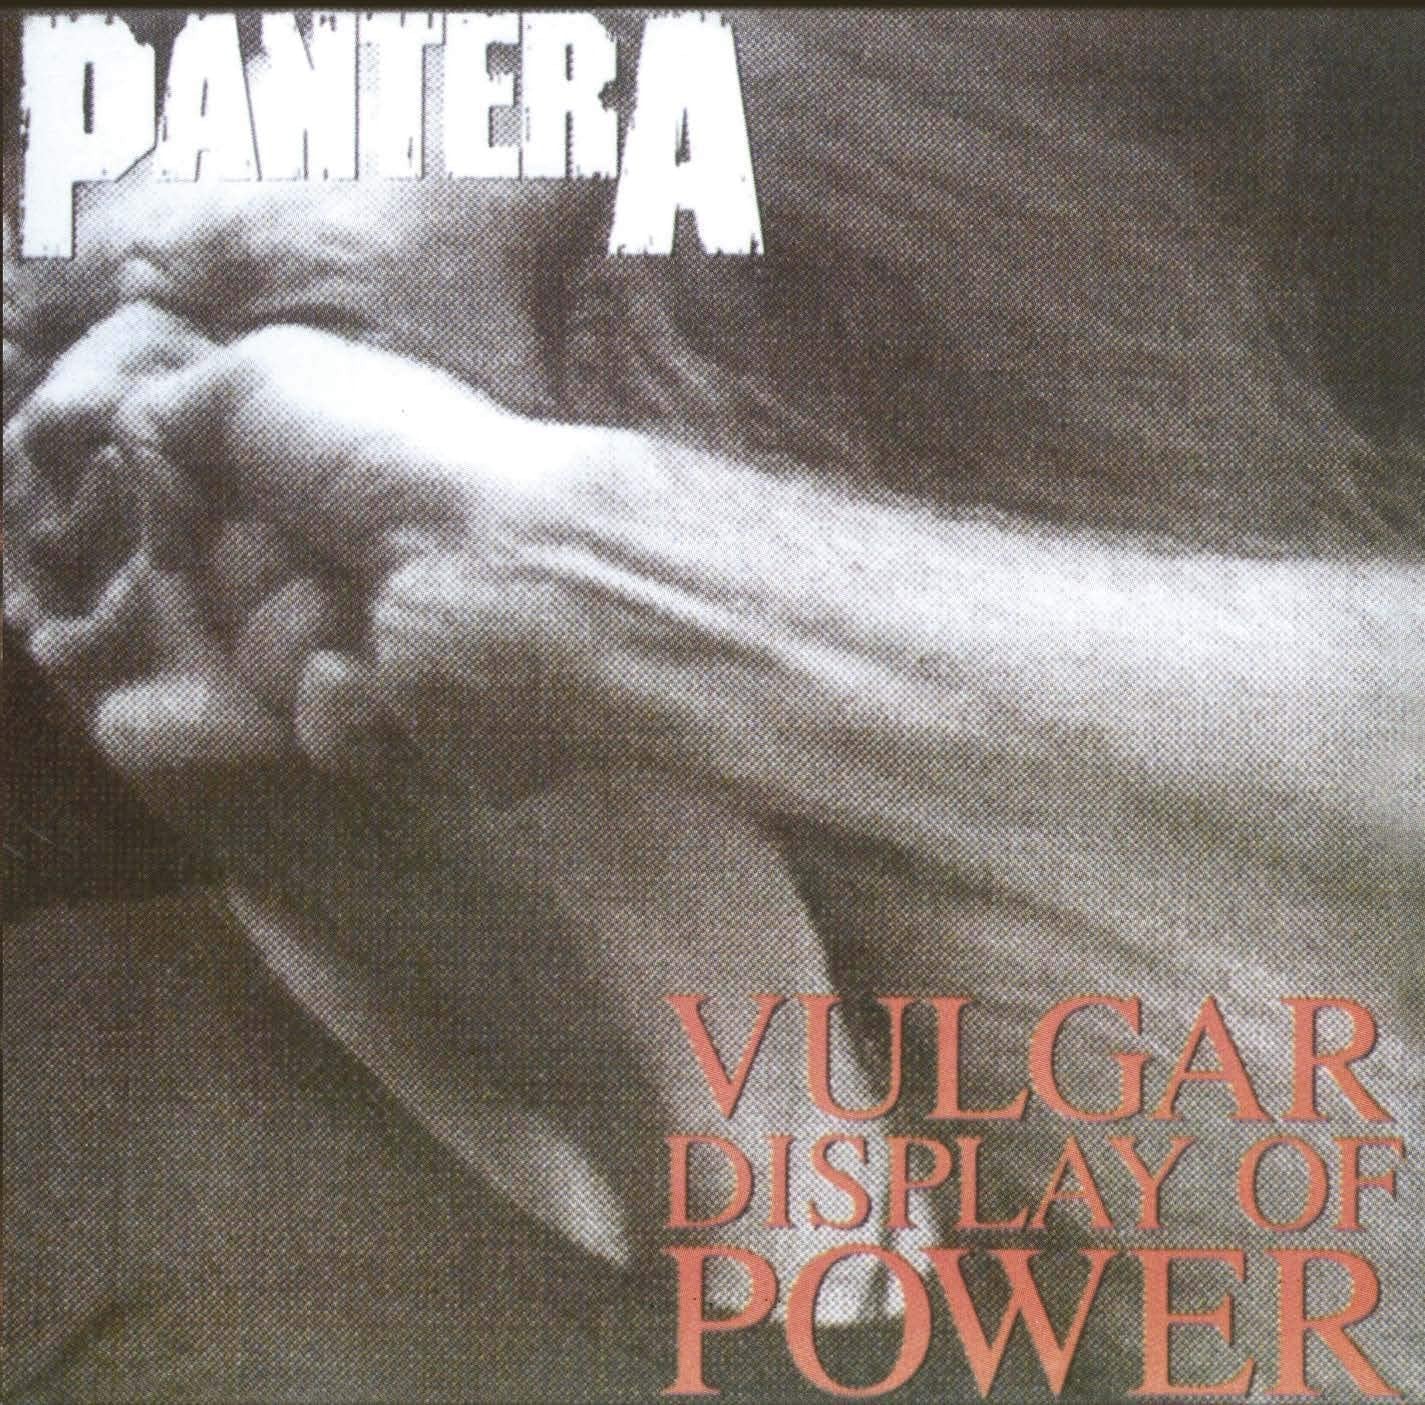 Pantera "Vulgar Display of Power" 2LP